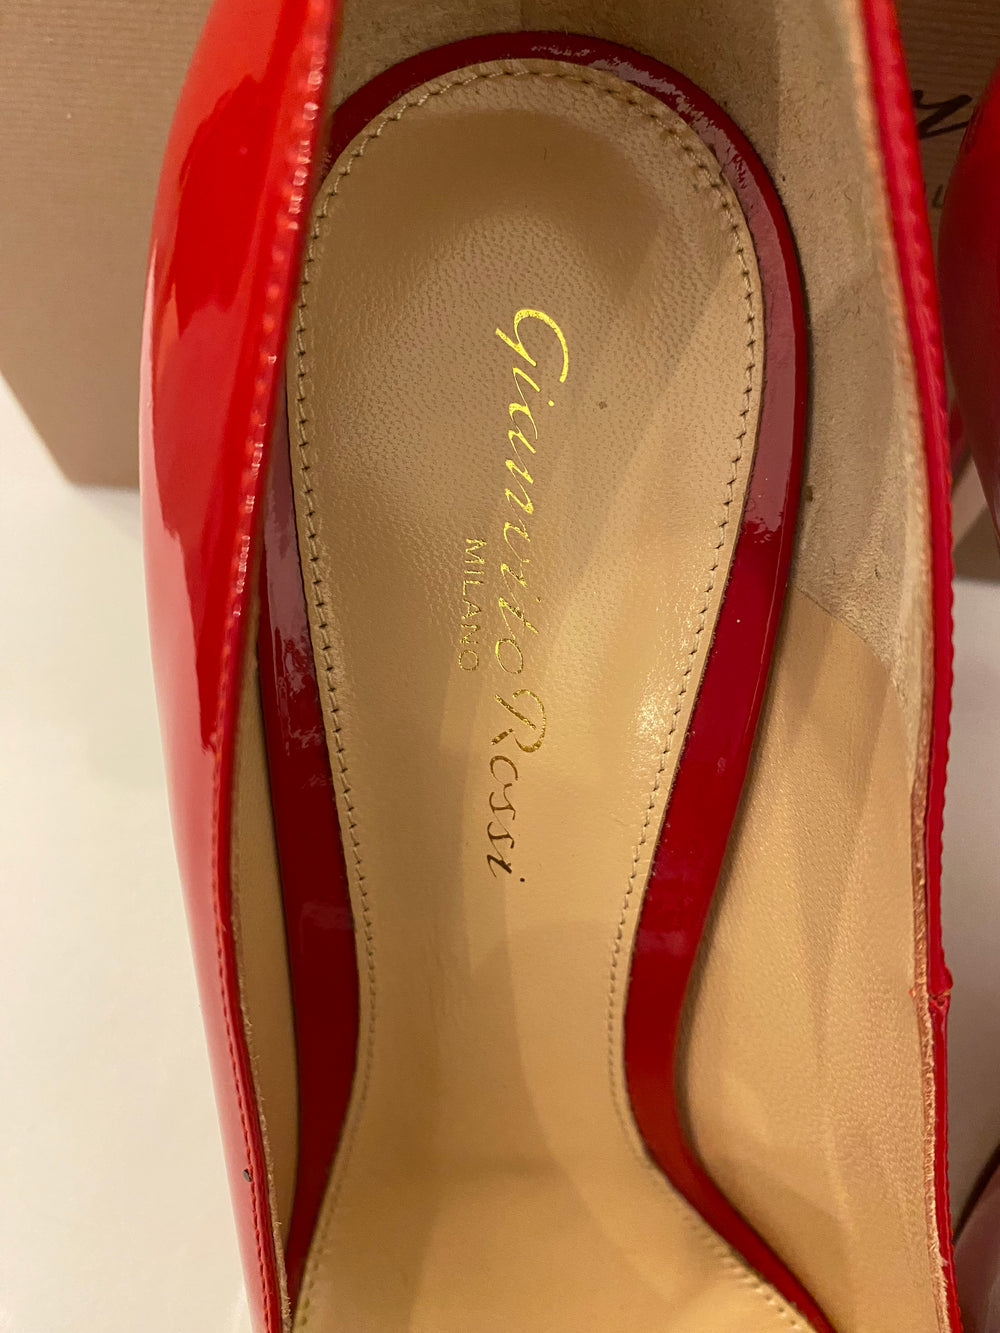 Gianvito Rossi Paris Vernice Tabasco Red 105 Patent Heels uk6 (new)